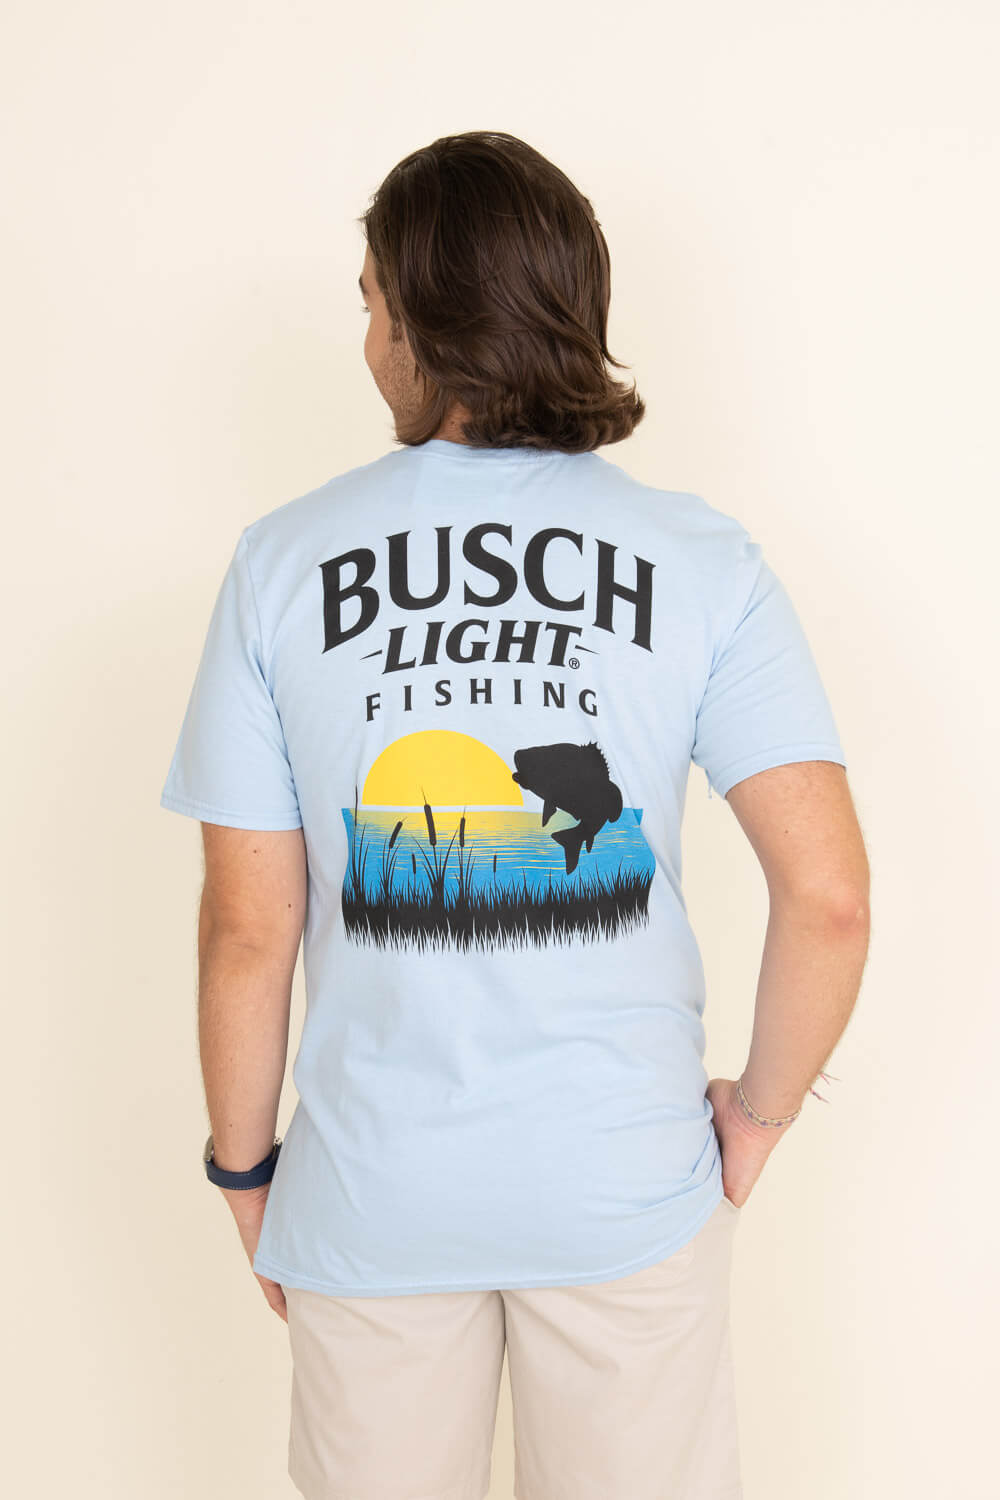 Brew City Beer Gear, Inc. Brew City Apparel Busch Light Bass Fishing T-Shirt for Men in Baby Blue at Glik's , XXL